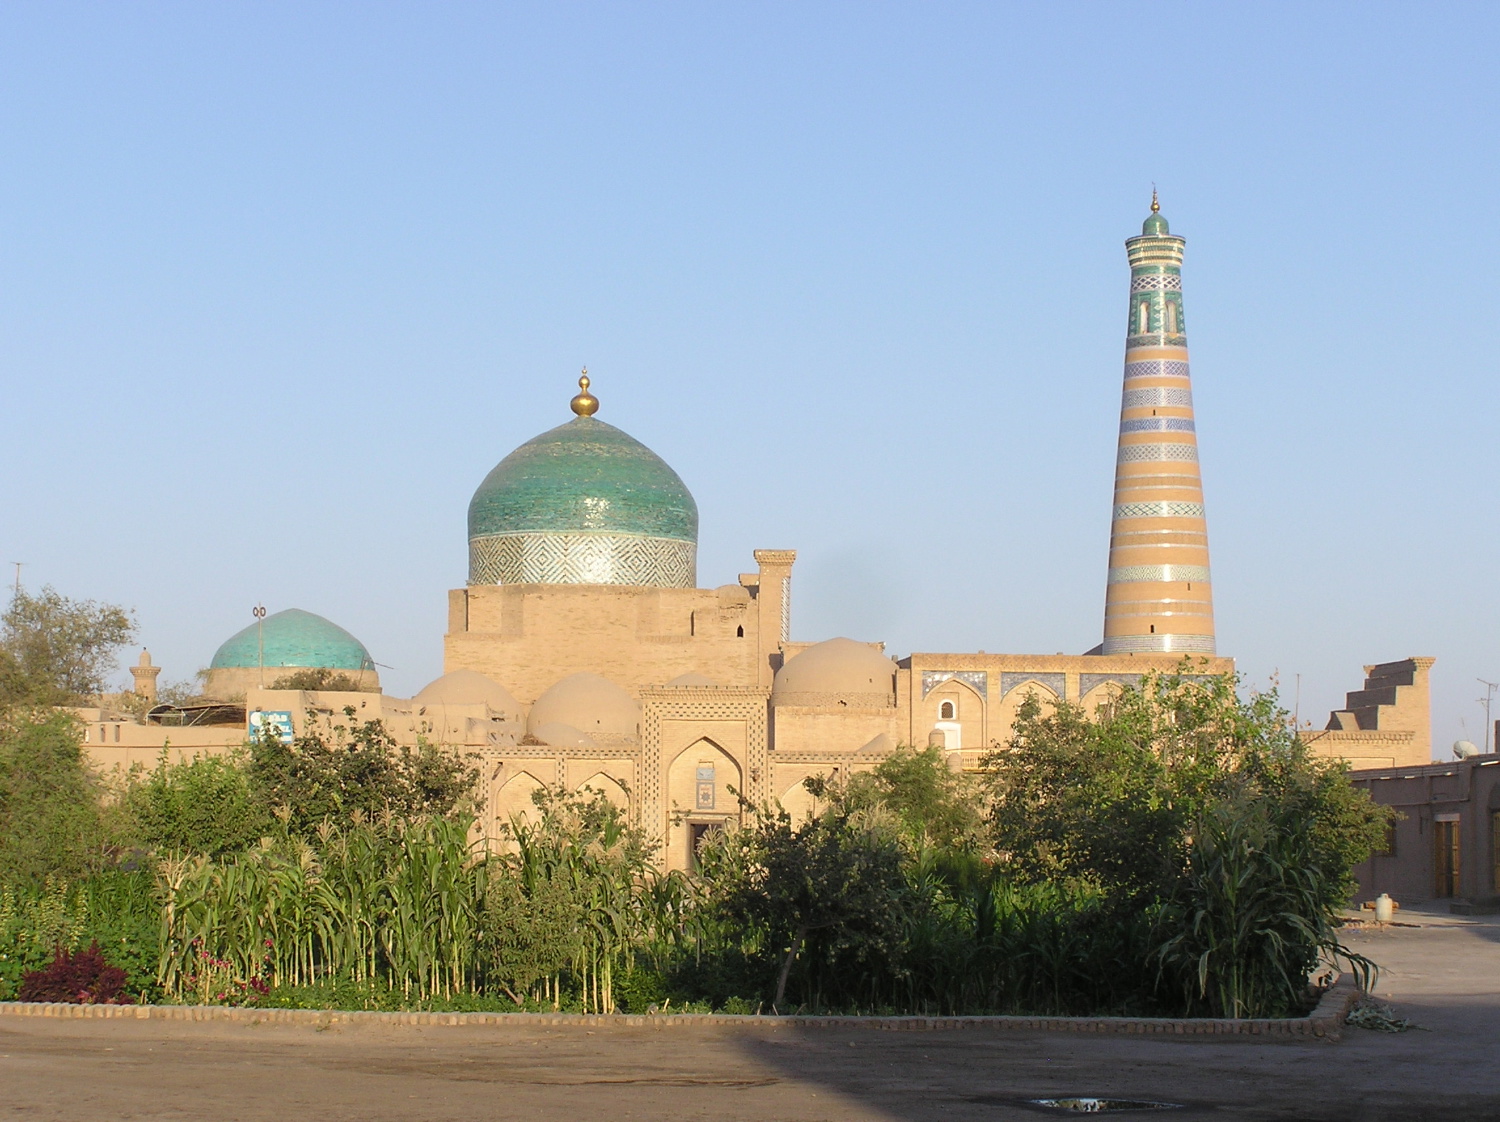 General view, with minaret of Islam Hodja Madrasa at right